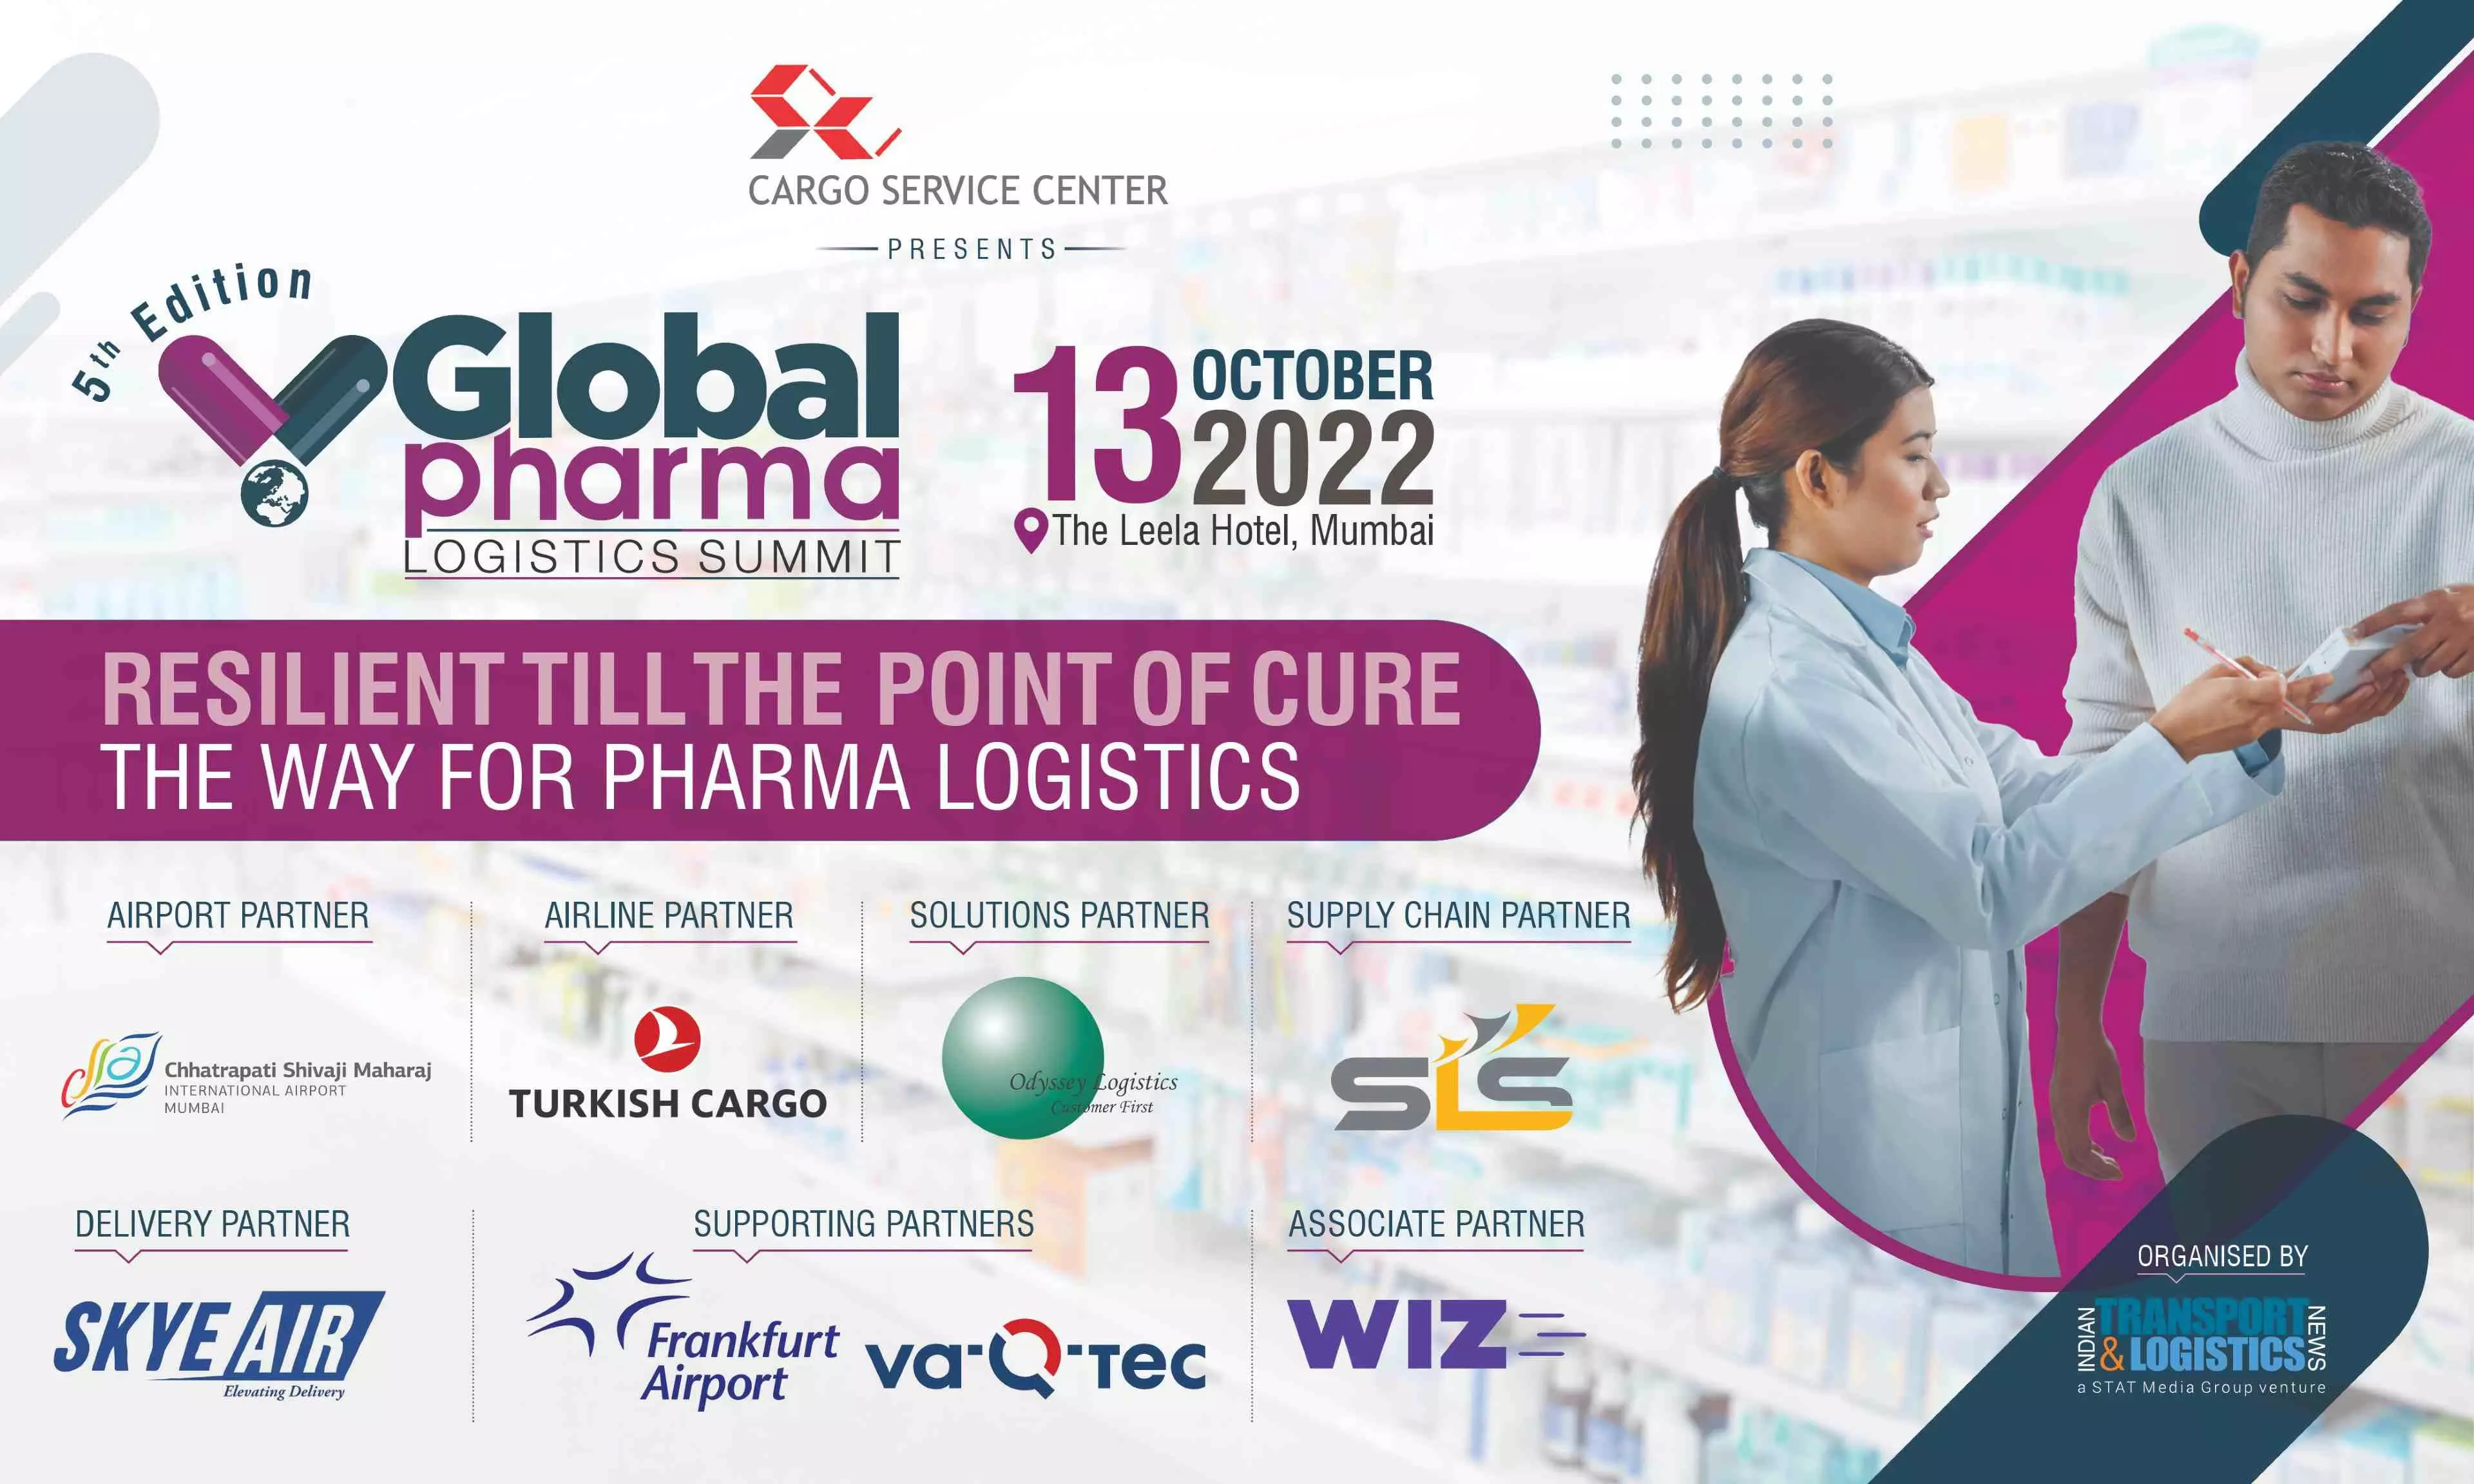 See you tomorrow in Mumbai for 5th edition of Global Pharma Logistics Summit